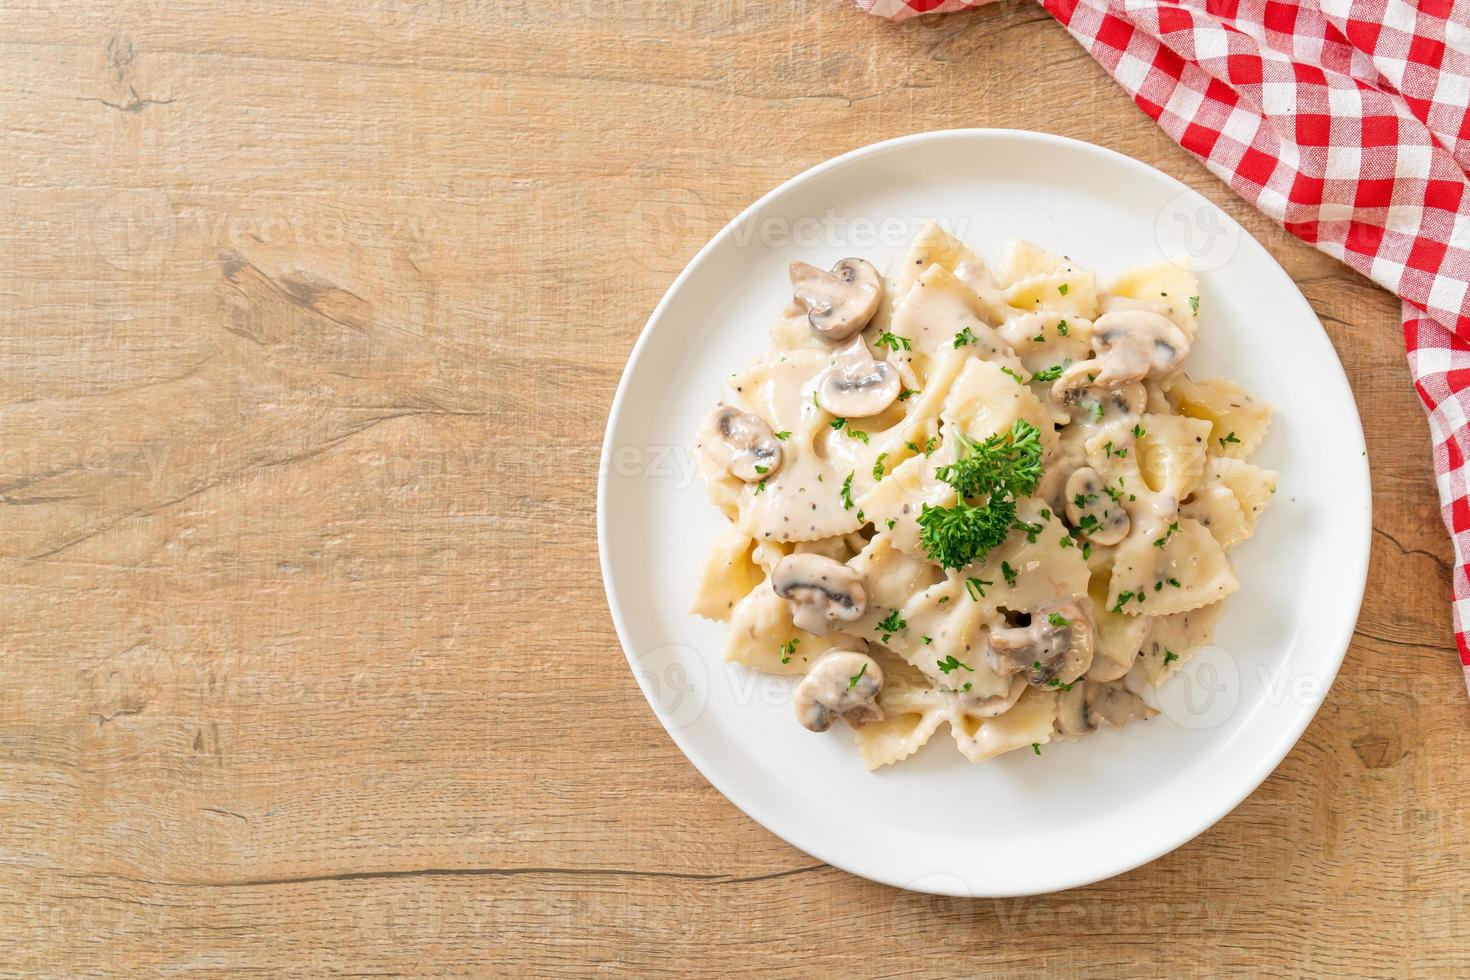 farfalle pasta met champignon witte roomsaus - italiaans eten stijl foto